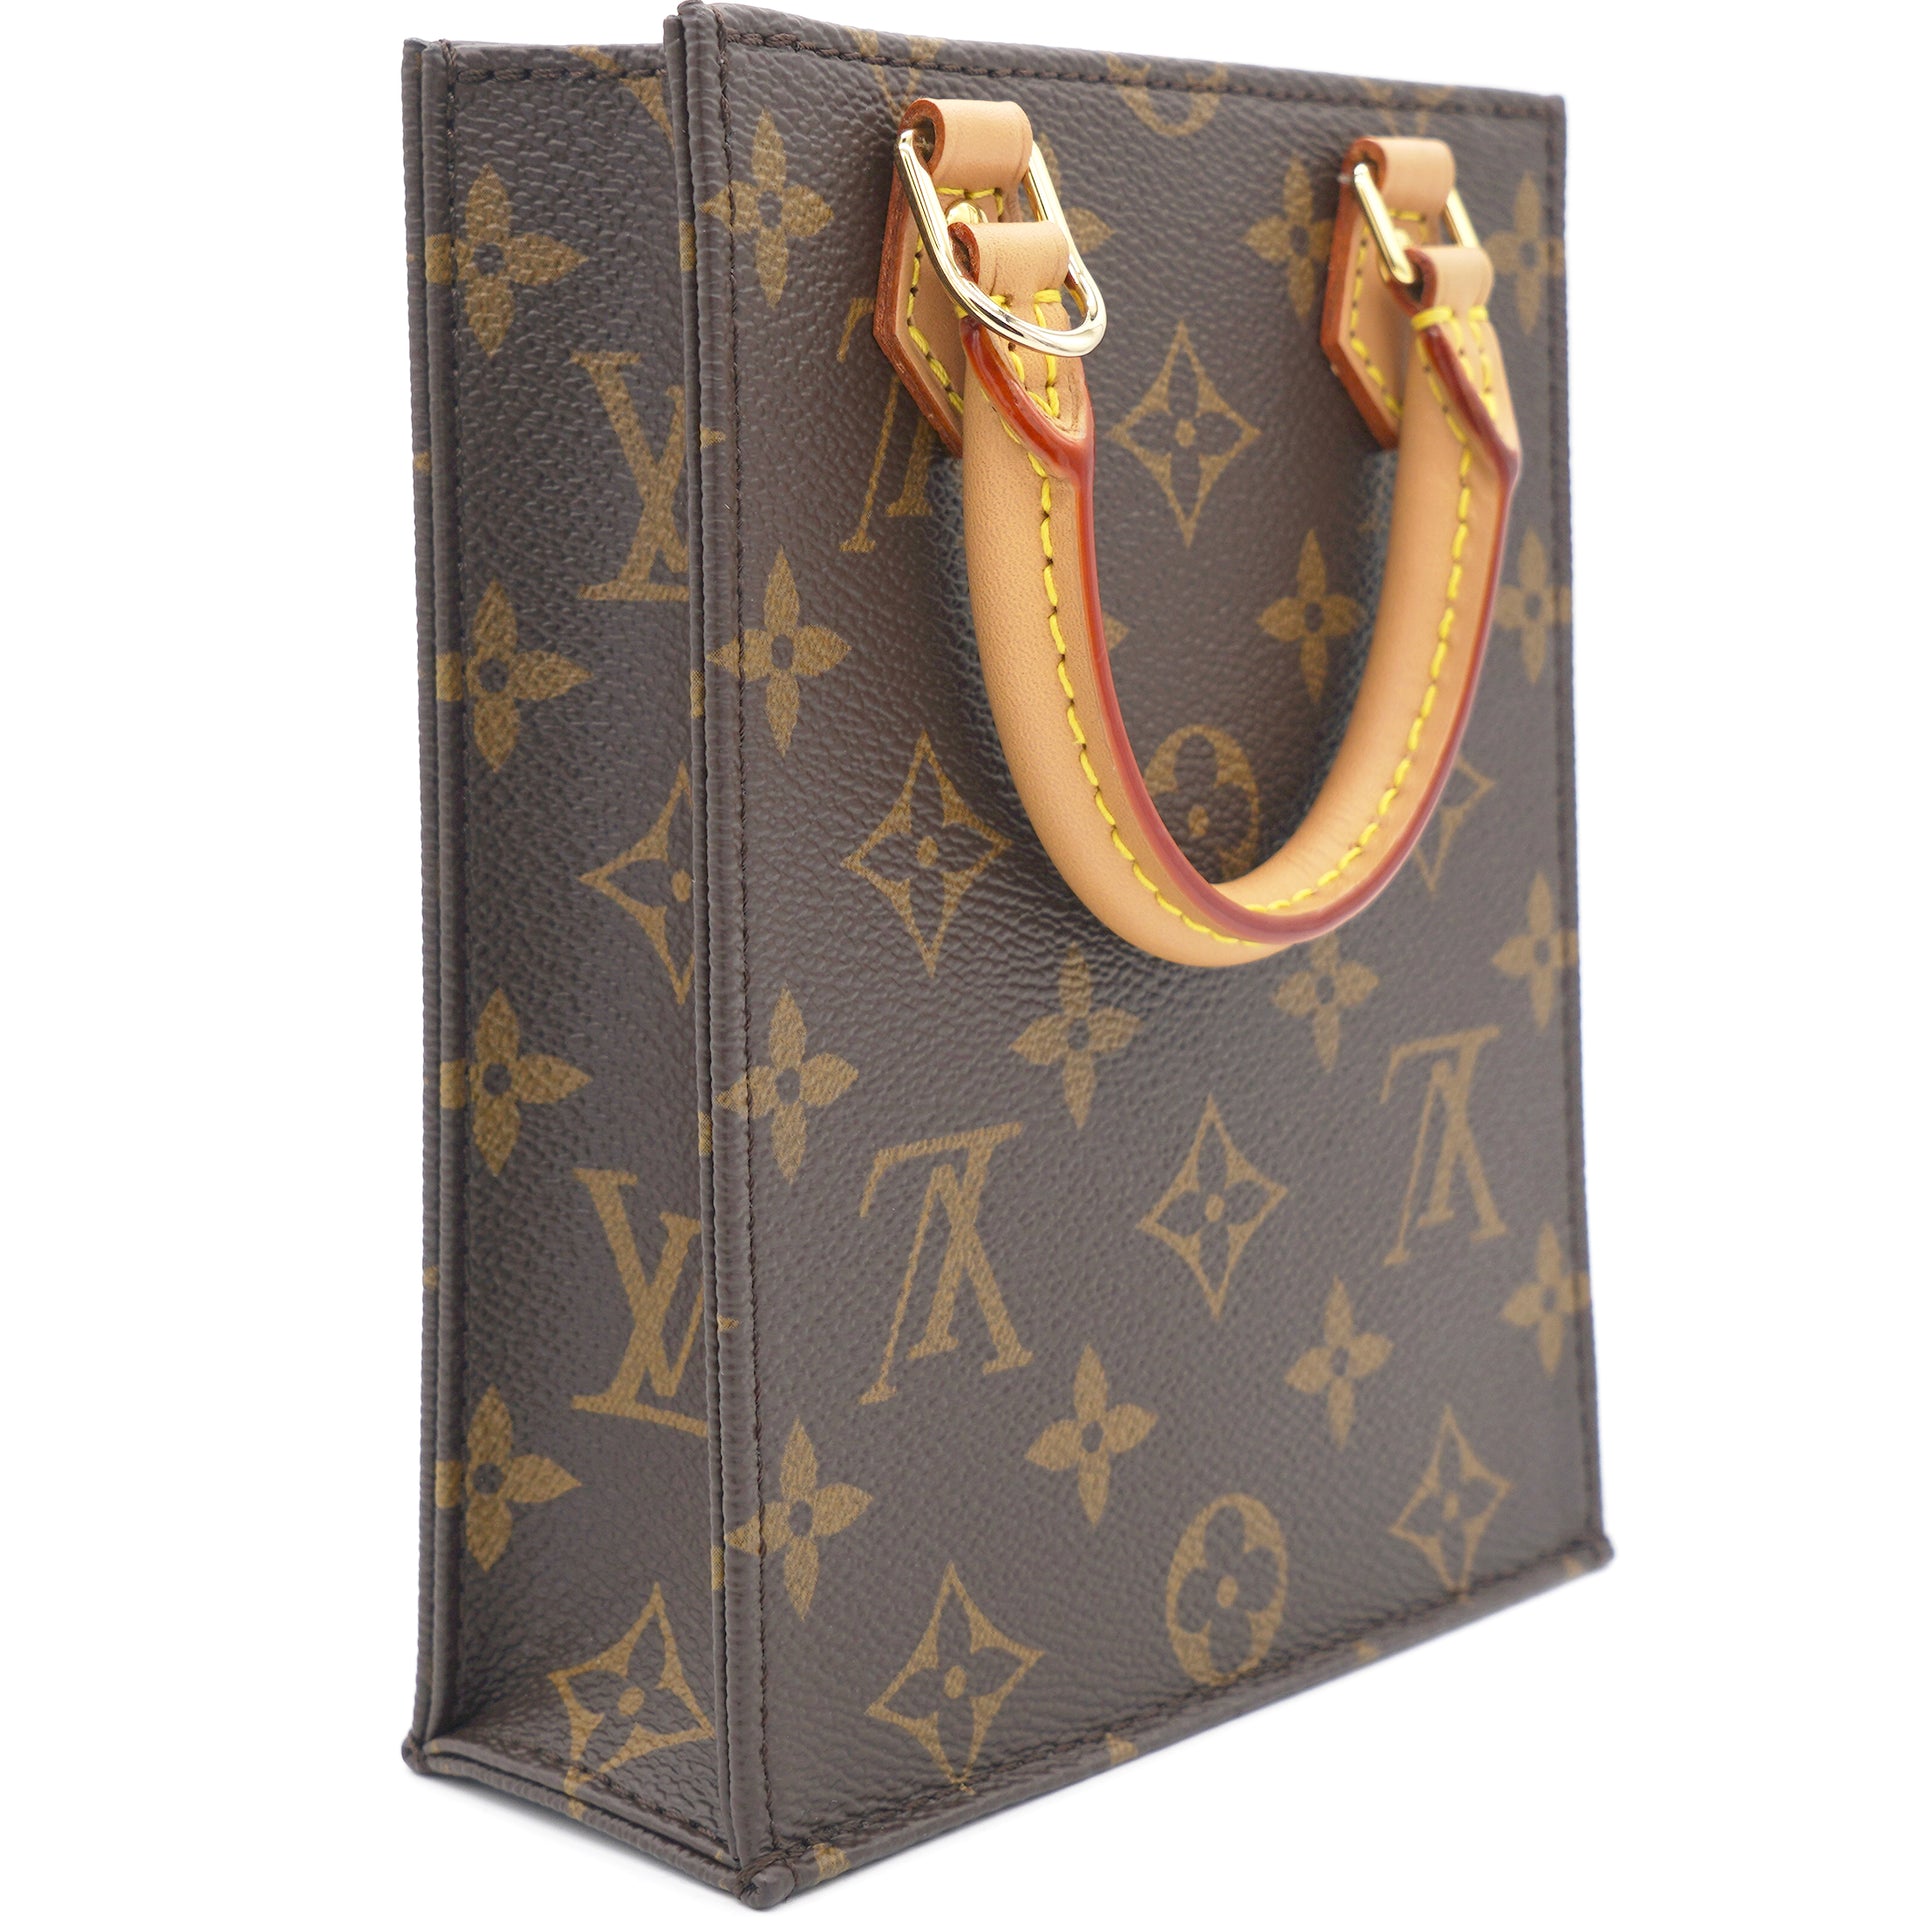 Best Deals for Sac Plat Louis Vuitton Bag